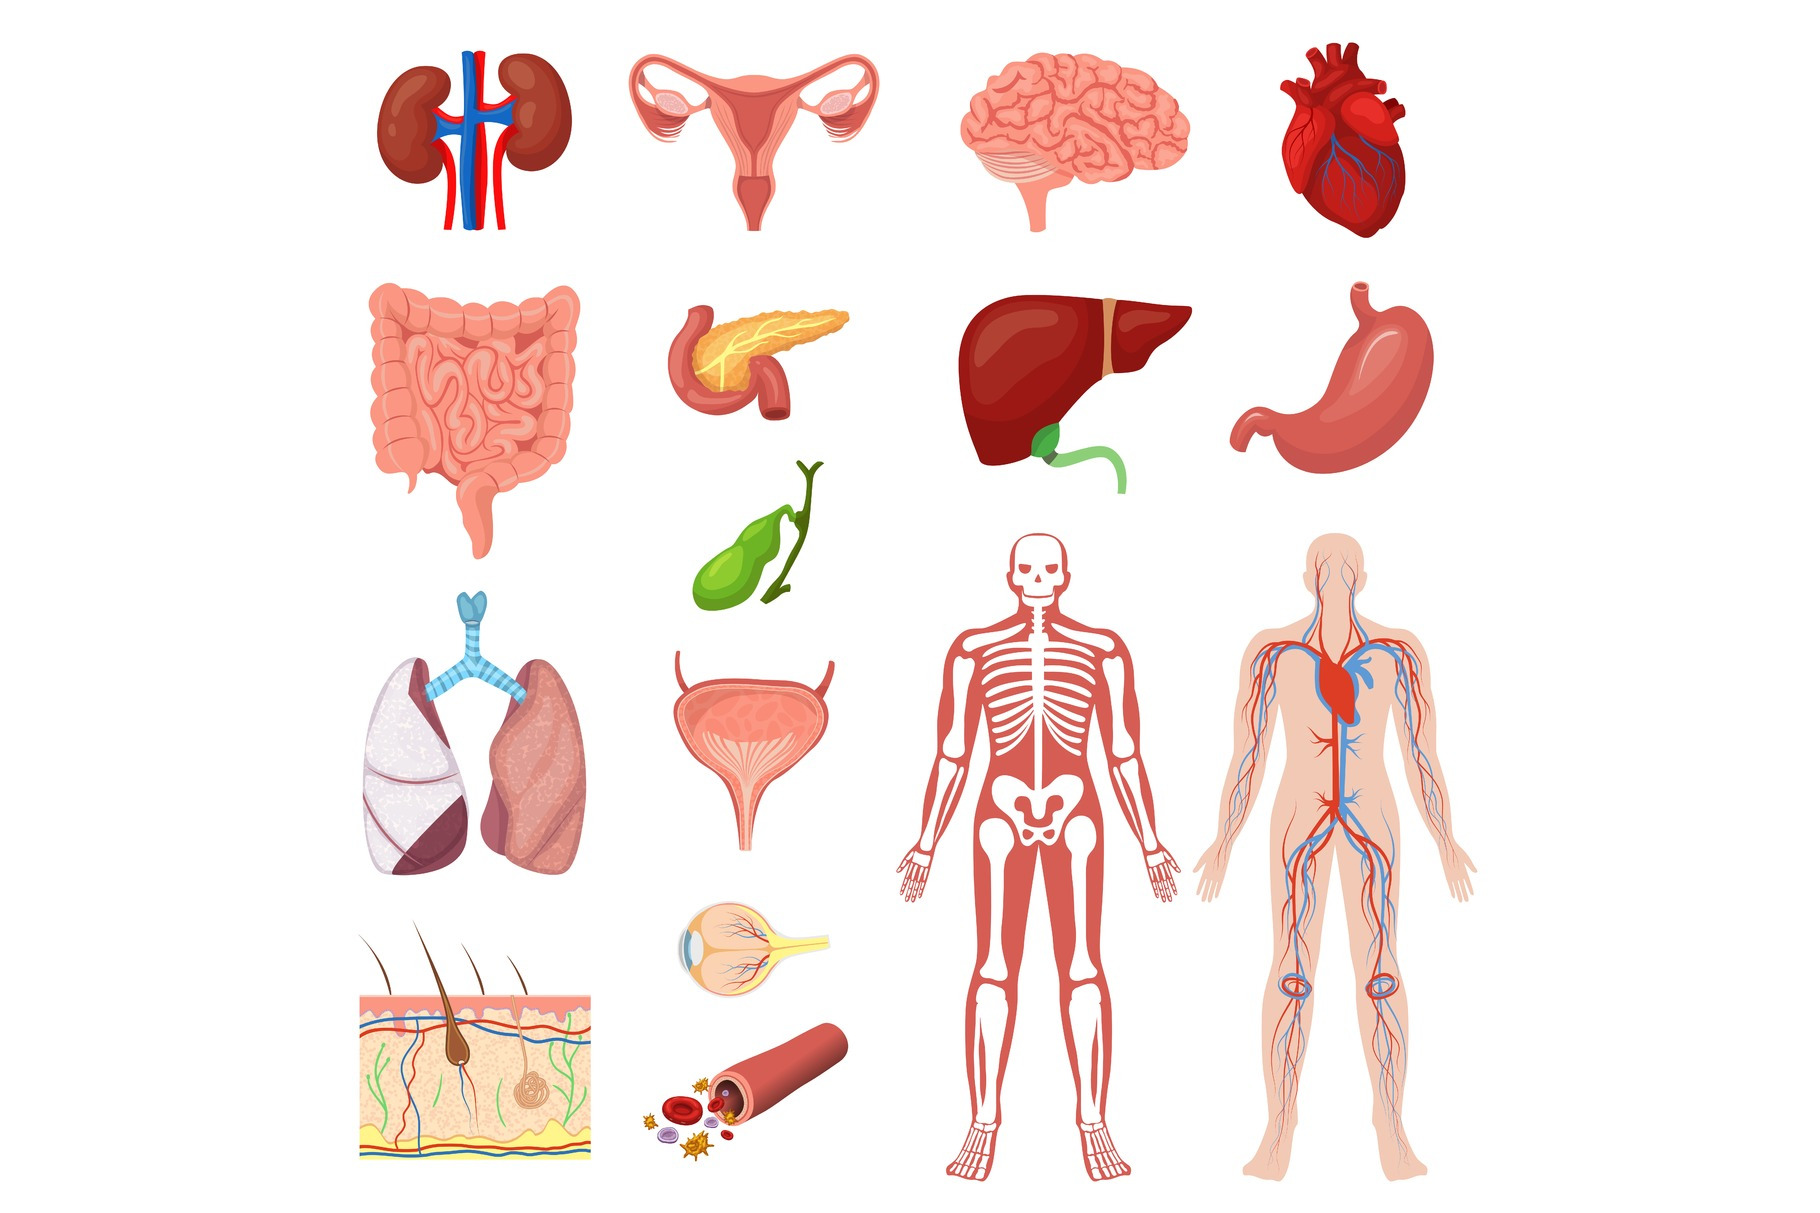 Human anatomy vector illustration | Graphic Objects ~ Creative Market